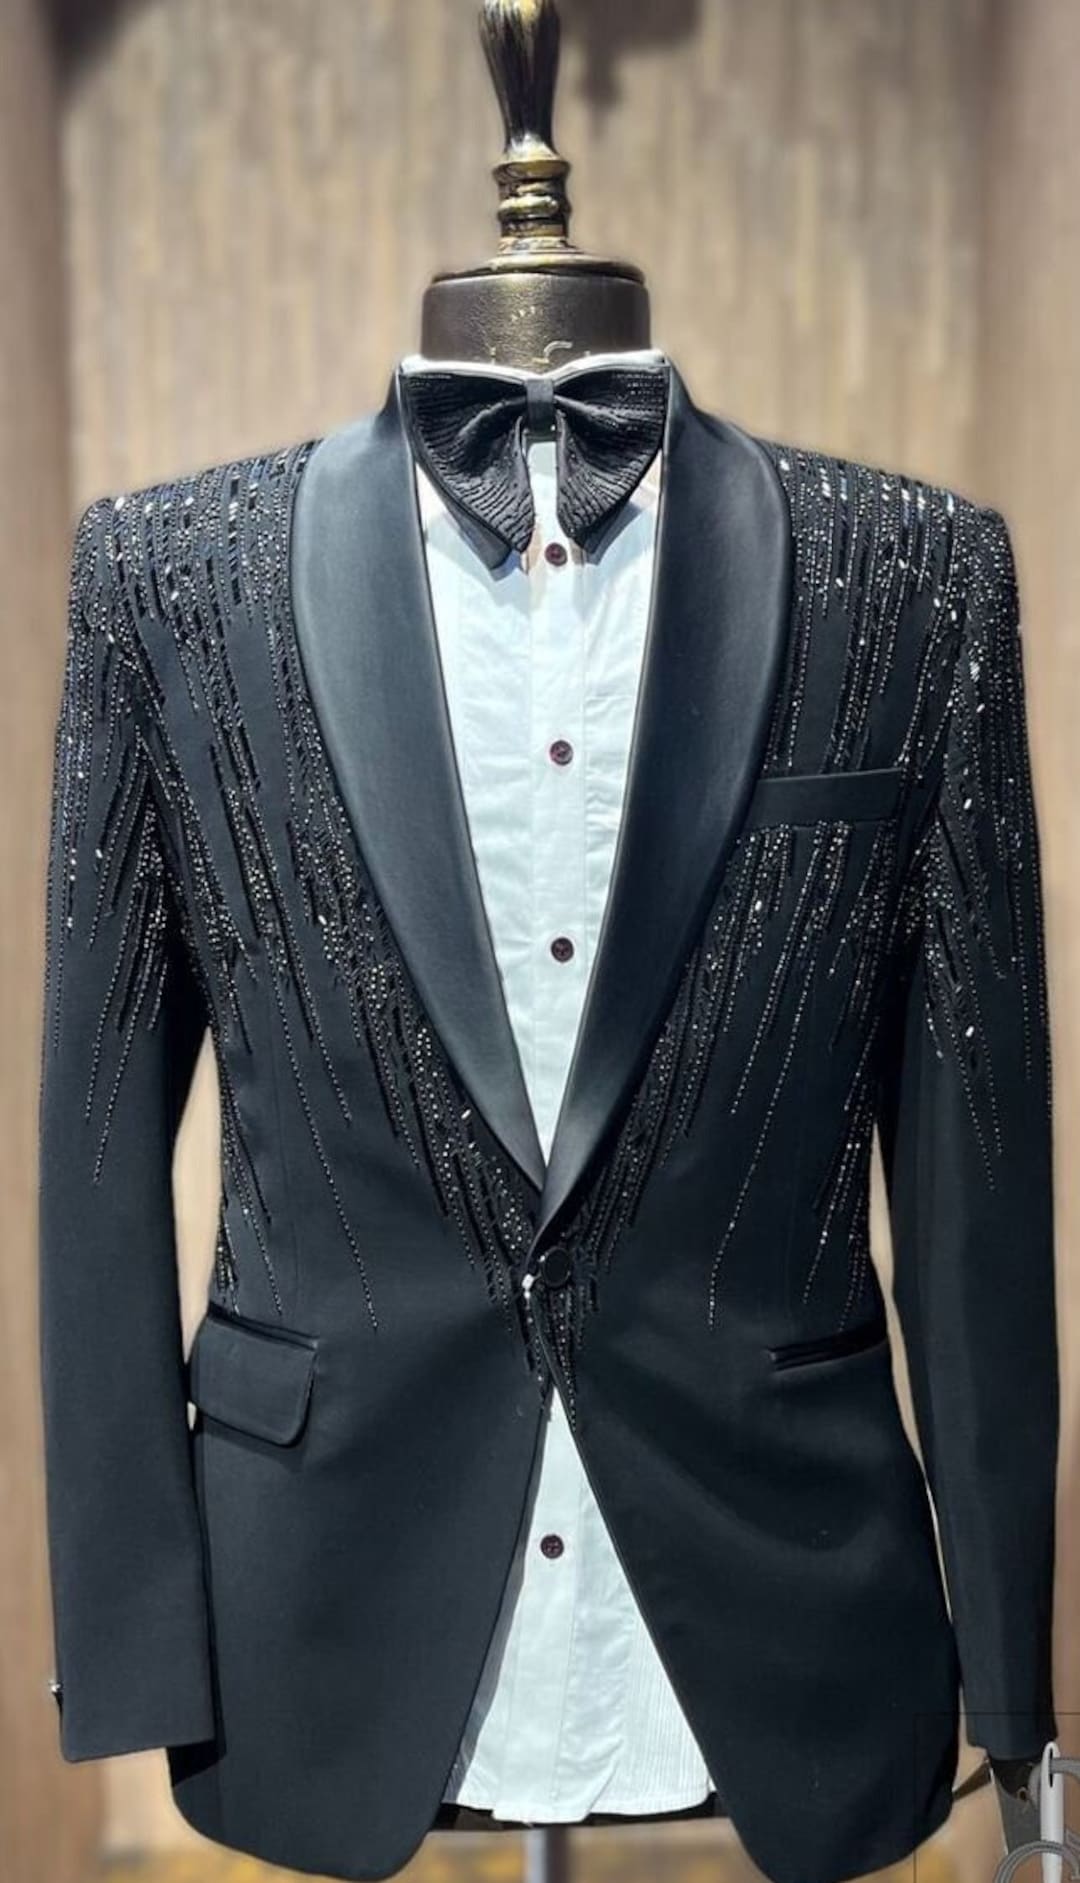 Silver Glitter Tuxedo Jacket